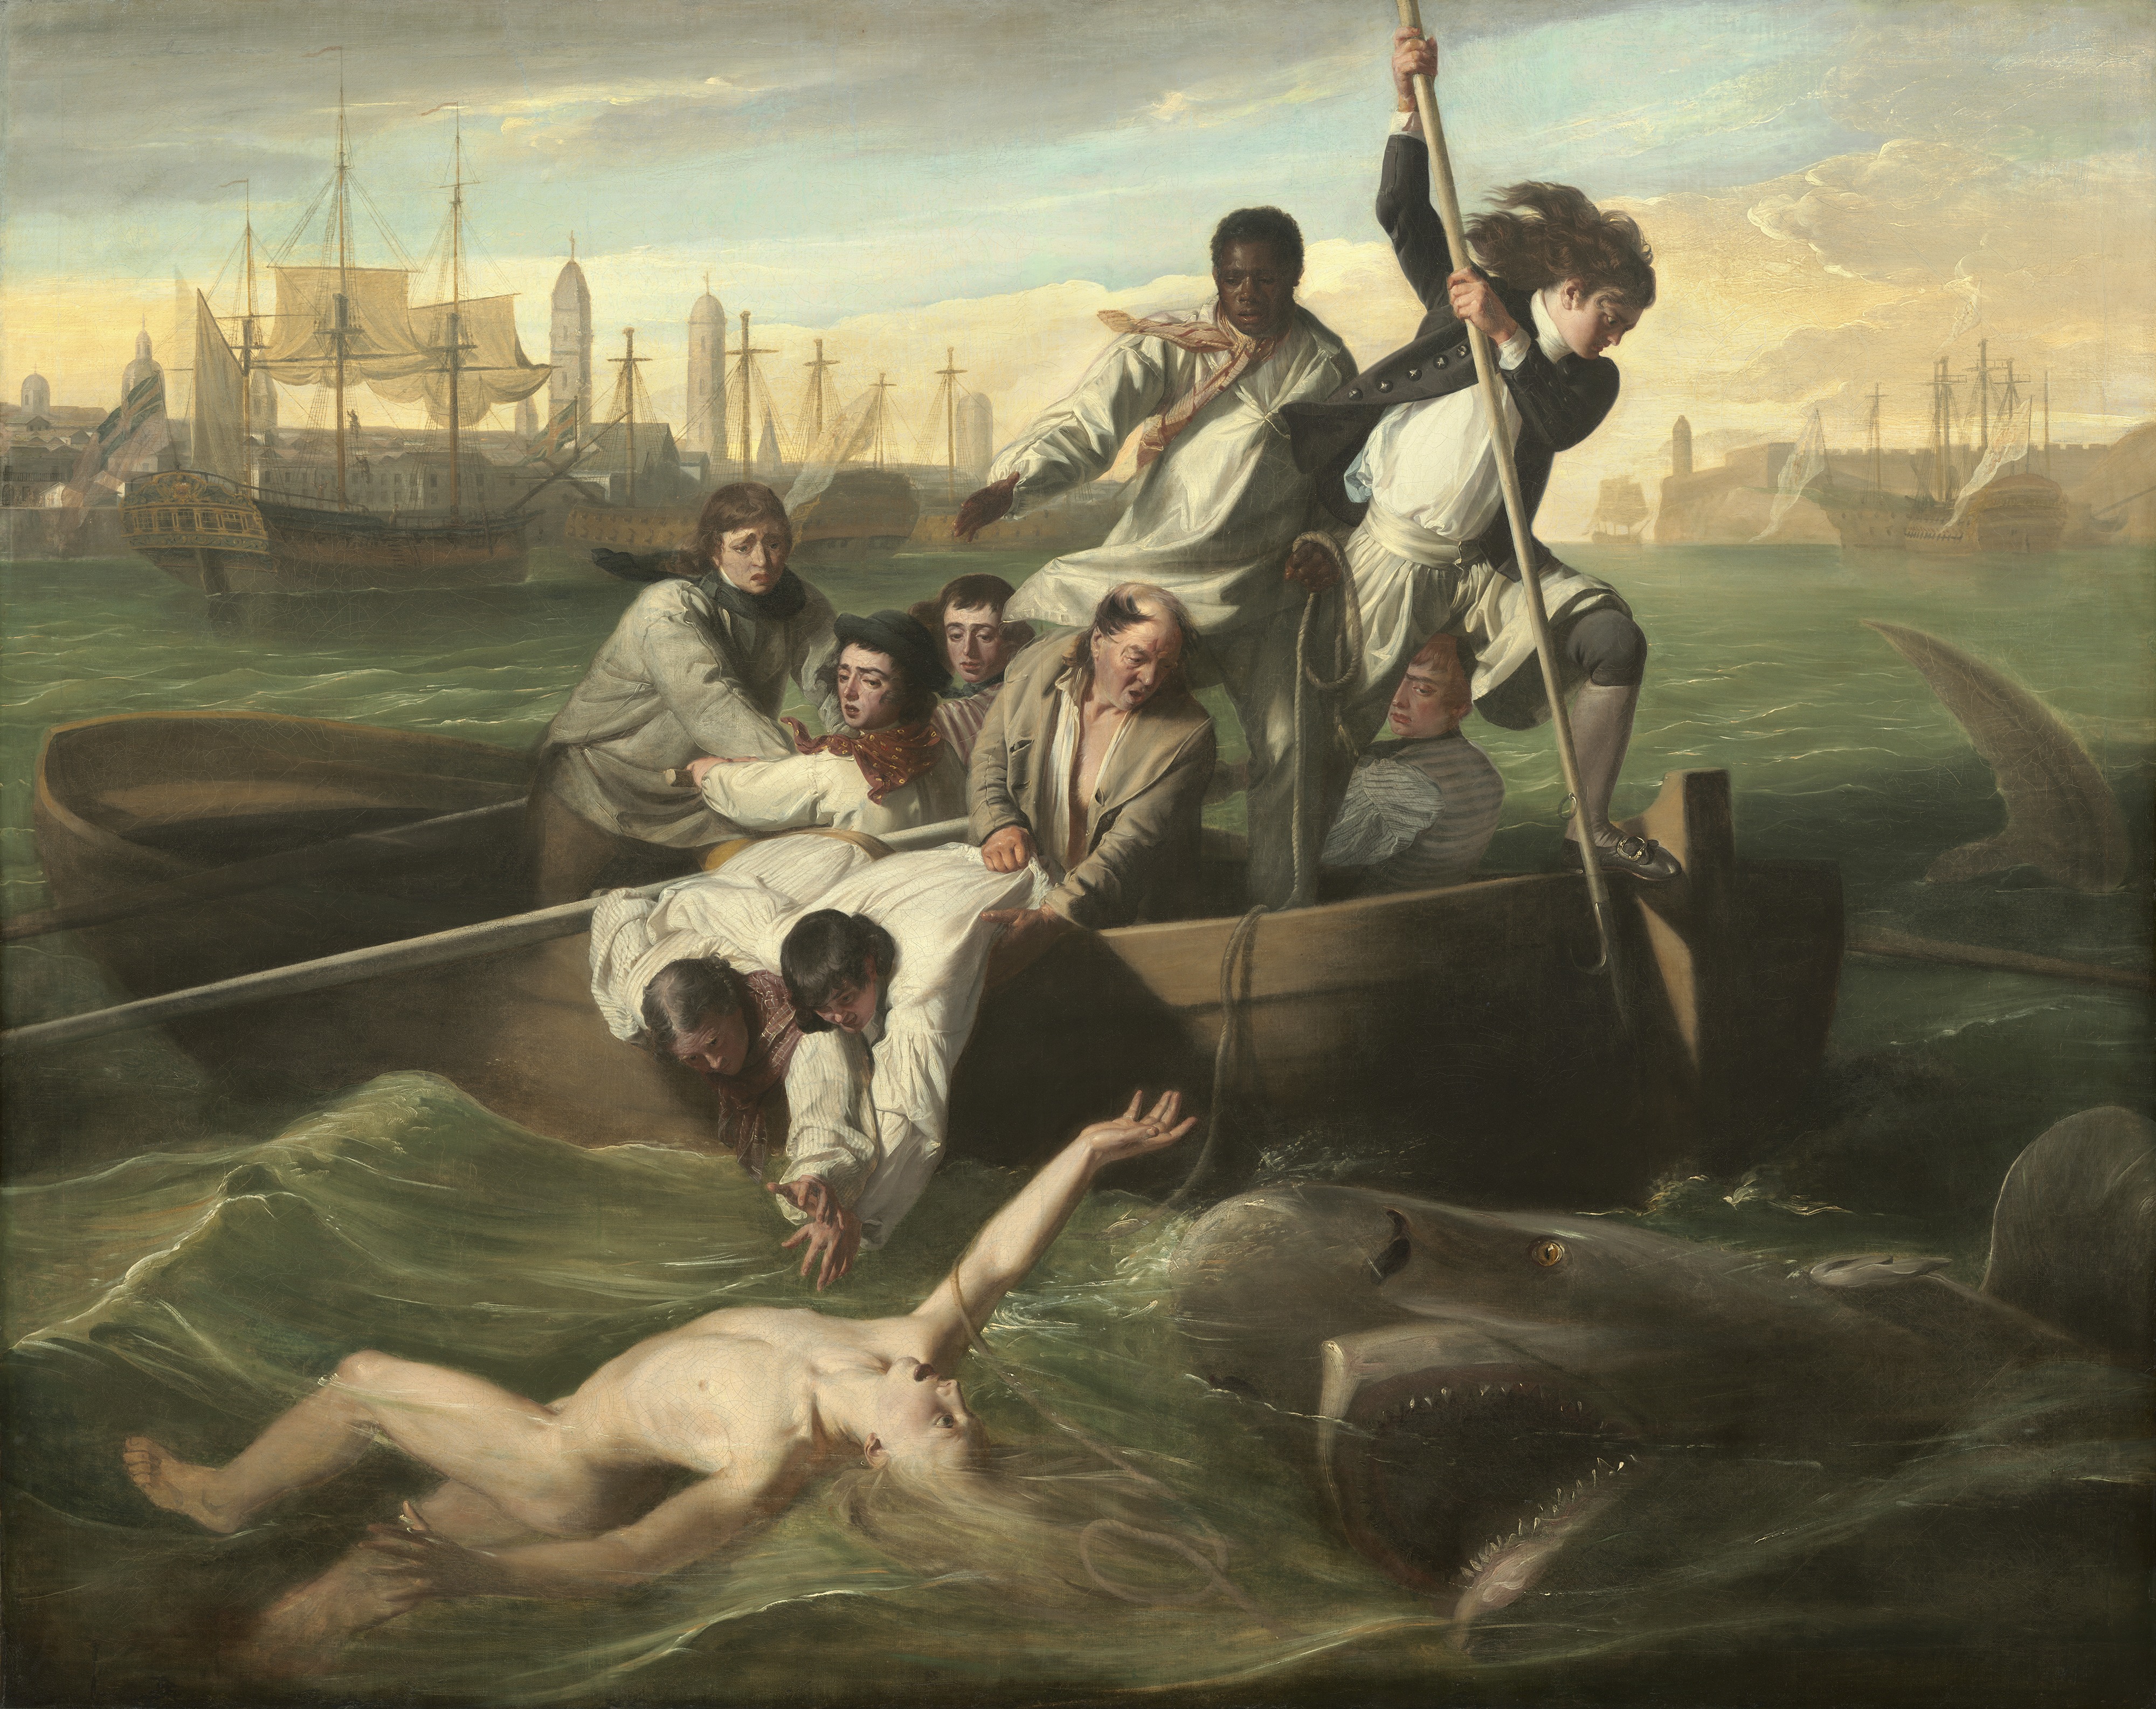 Watson and the Shark by John Singleton Copley - 1778 National Gallery of Art